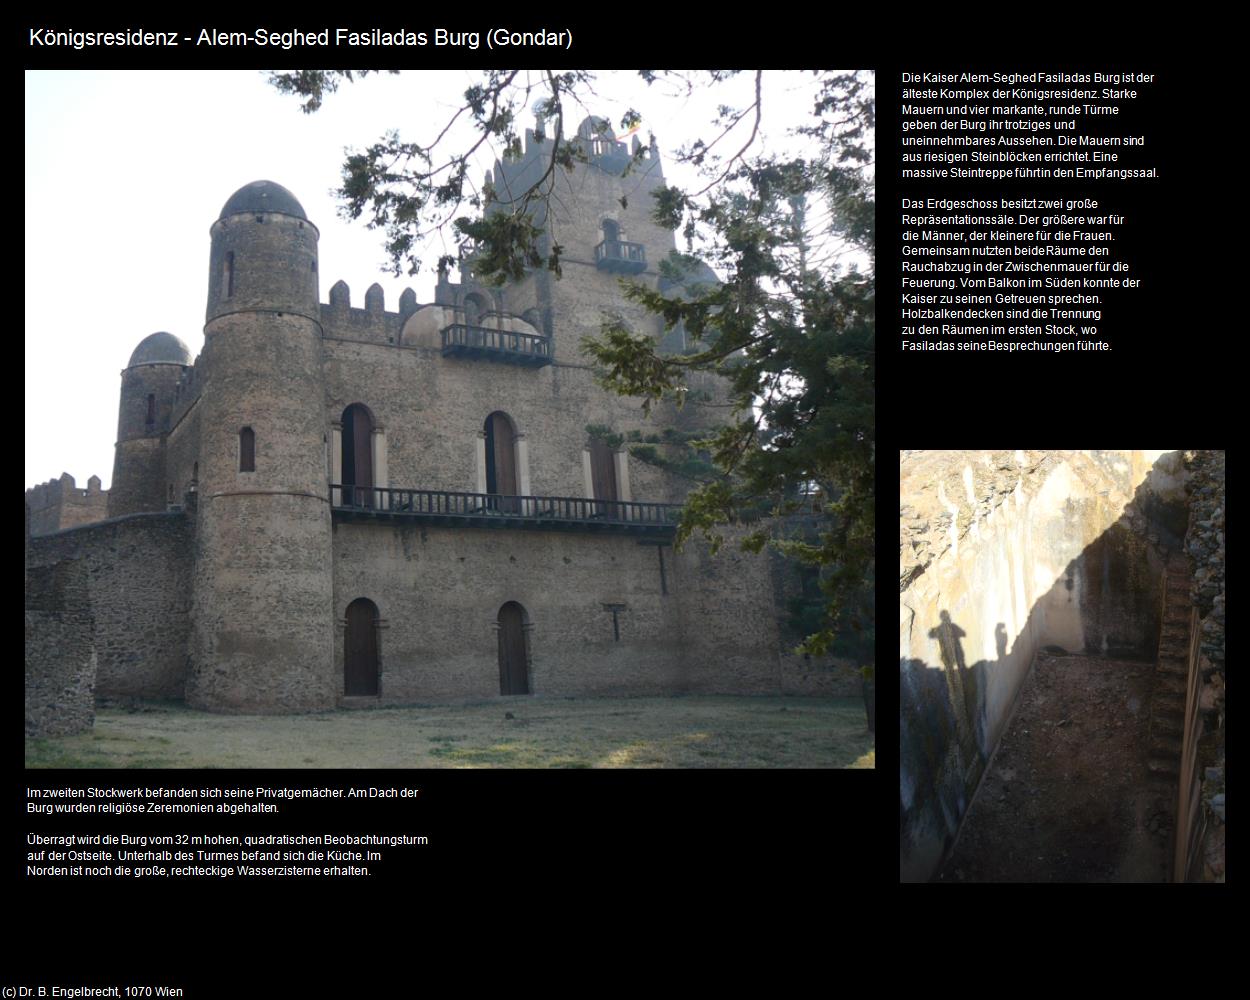 Alem-Seghed Fasiladas Burg (Gondar) in Äthiopien